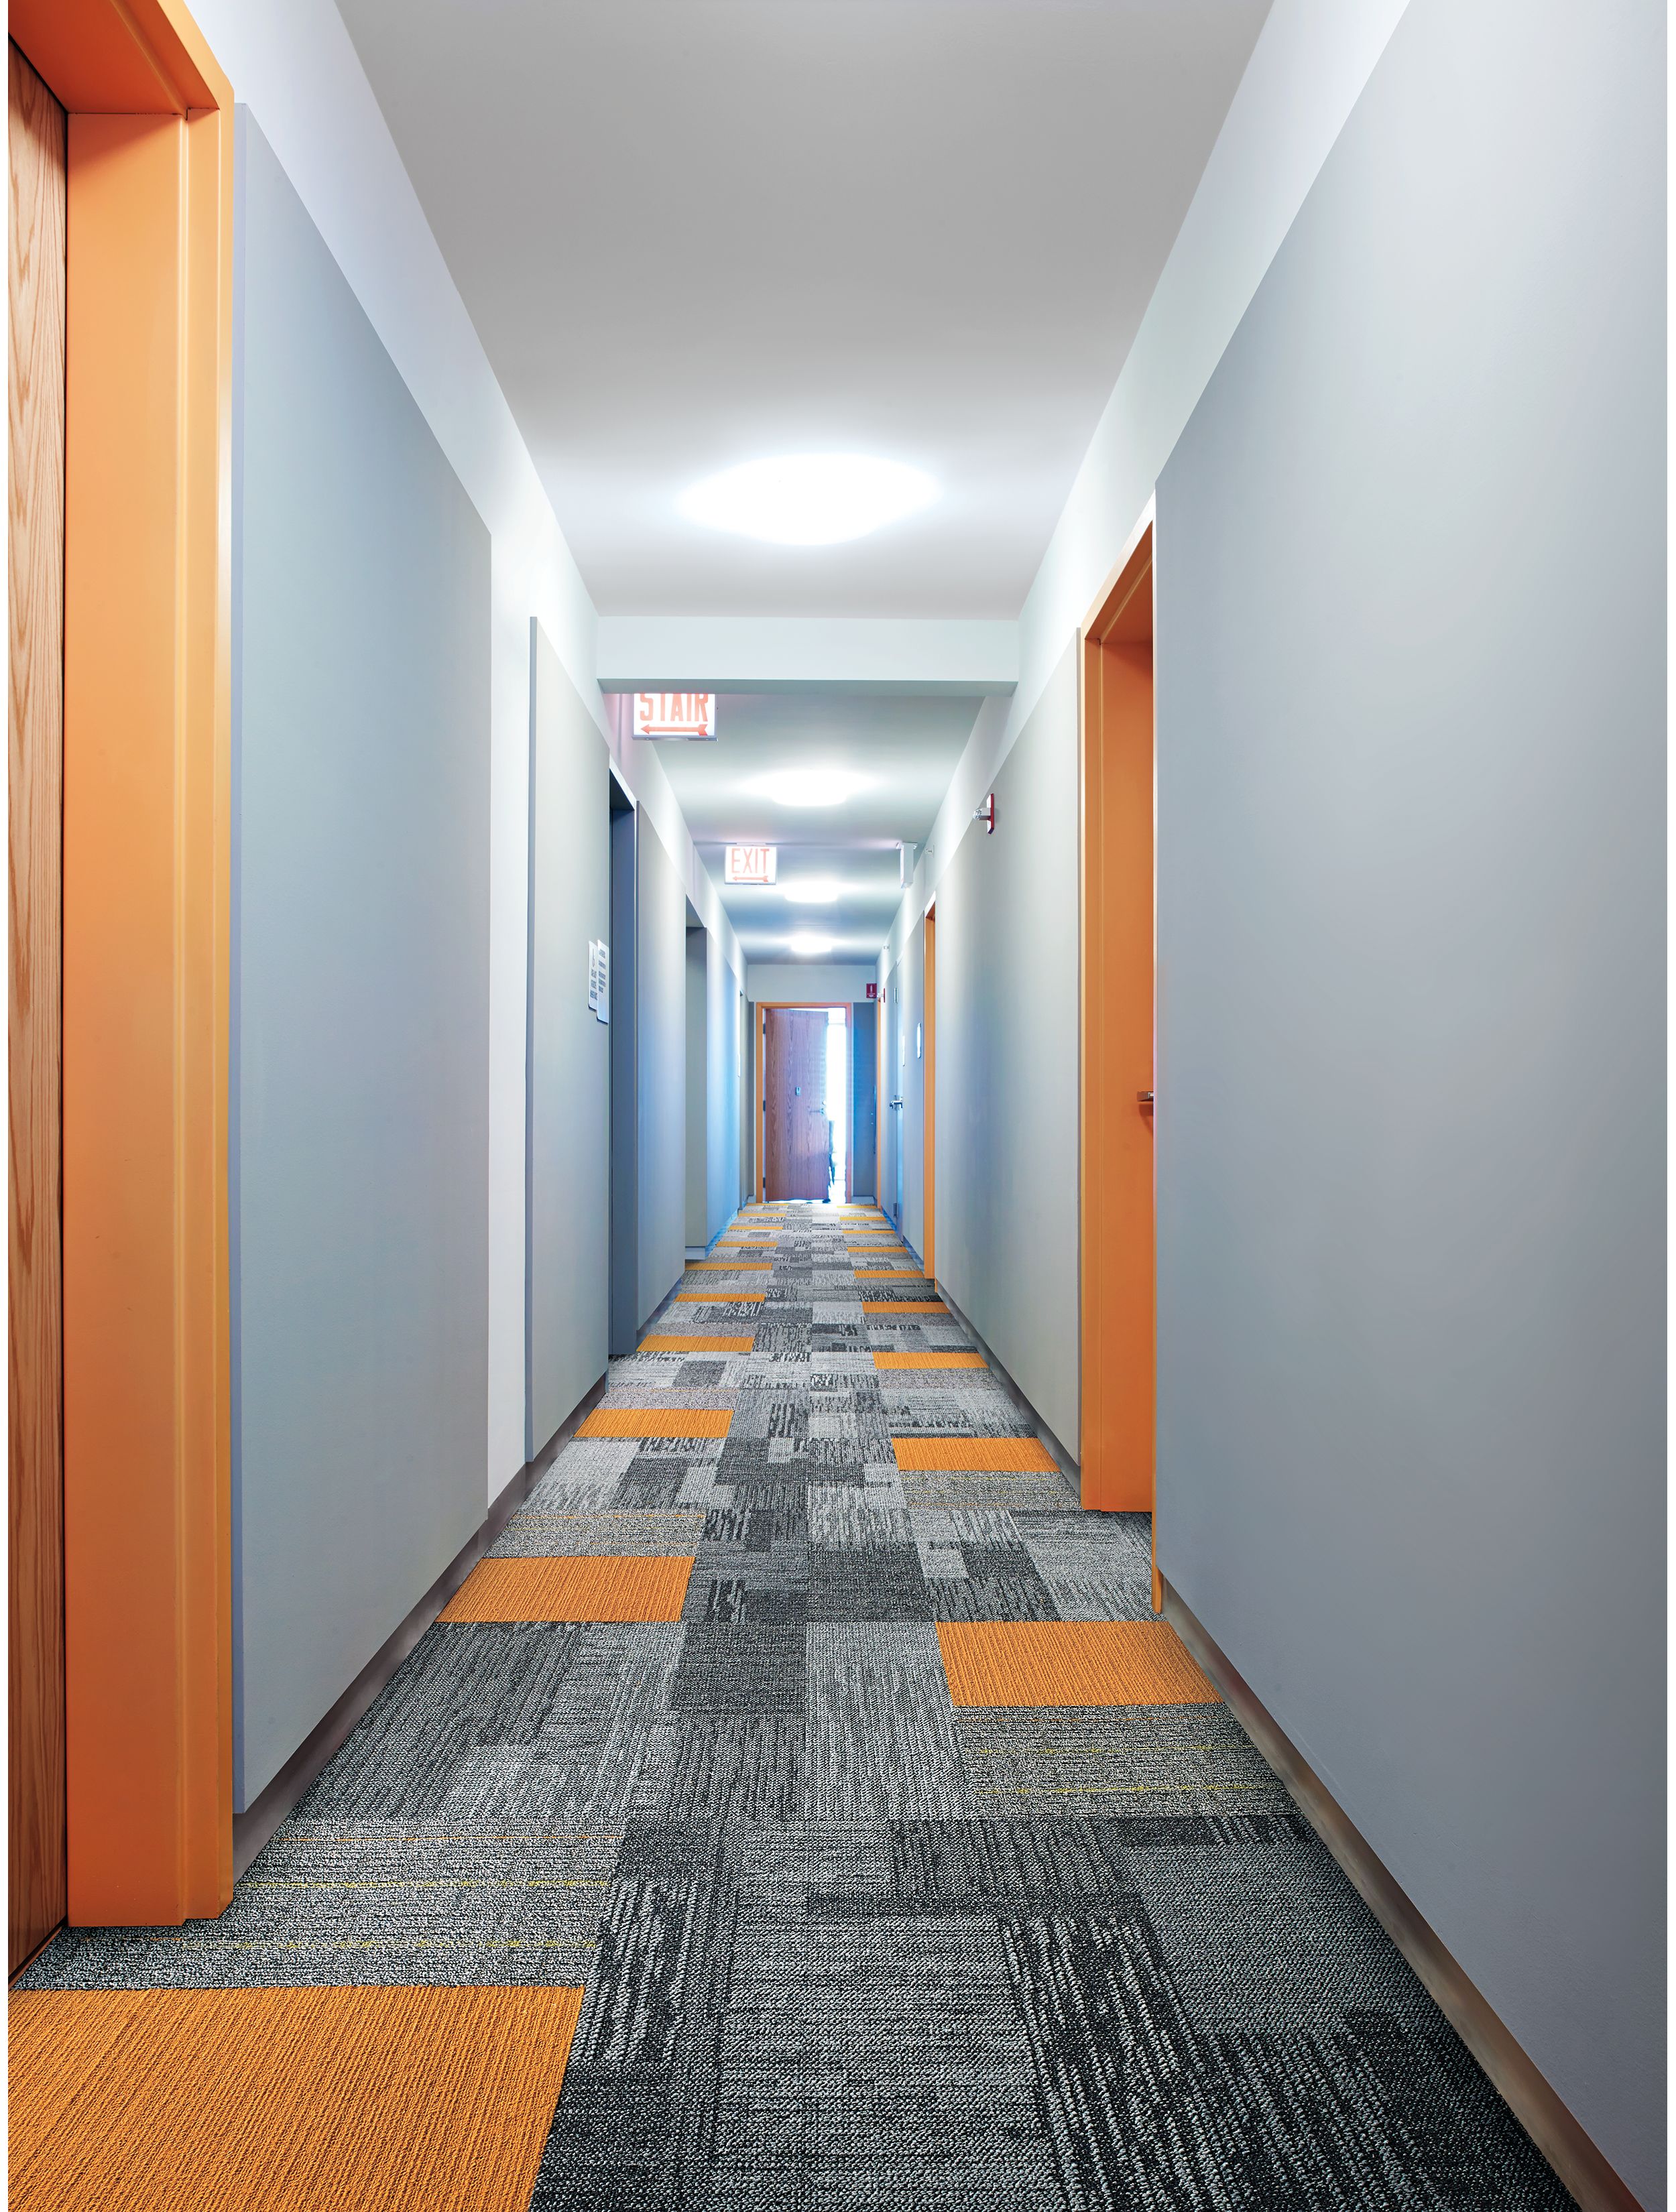 Verticals: Commercial Carpet Tile by Interface